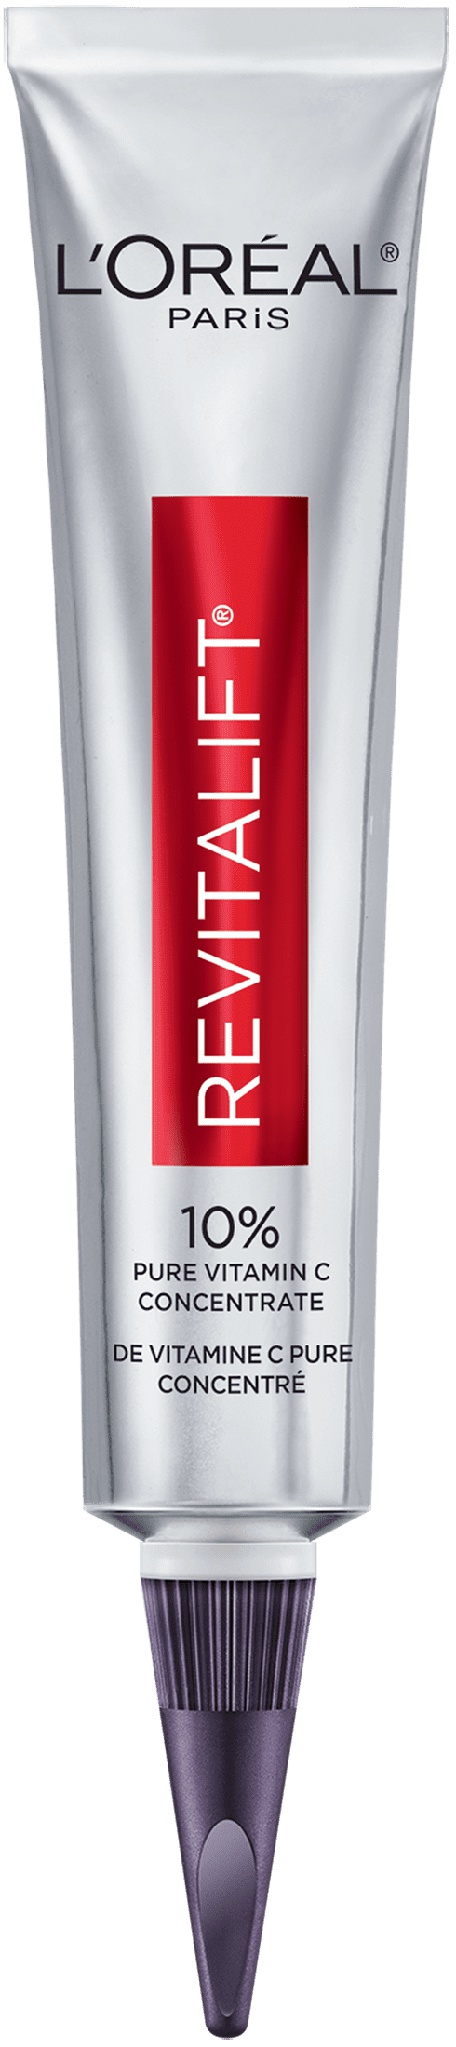 L'Oreal Paris Revitalift 10% Pure Vitamin C Face Serum, Brighter Skin, Reduced Wrinkles, Fragrance Free